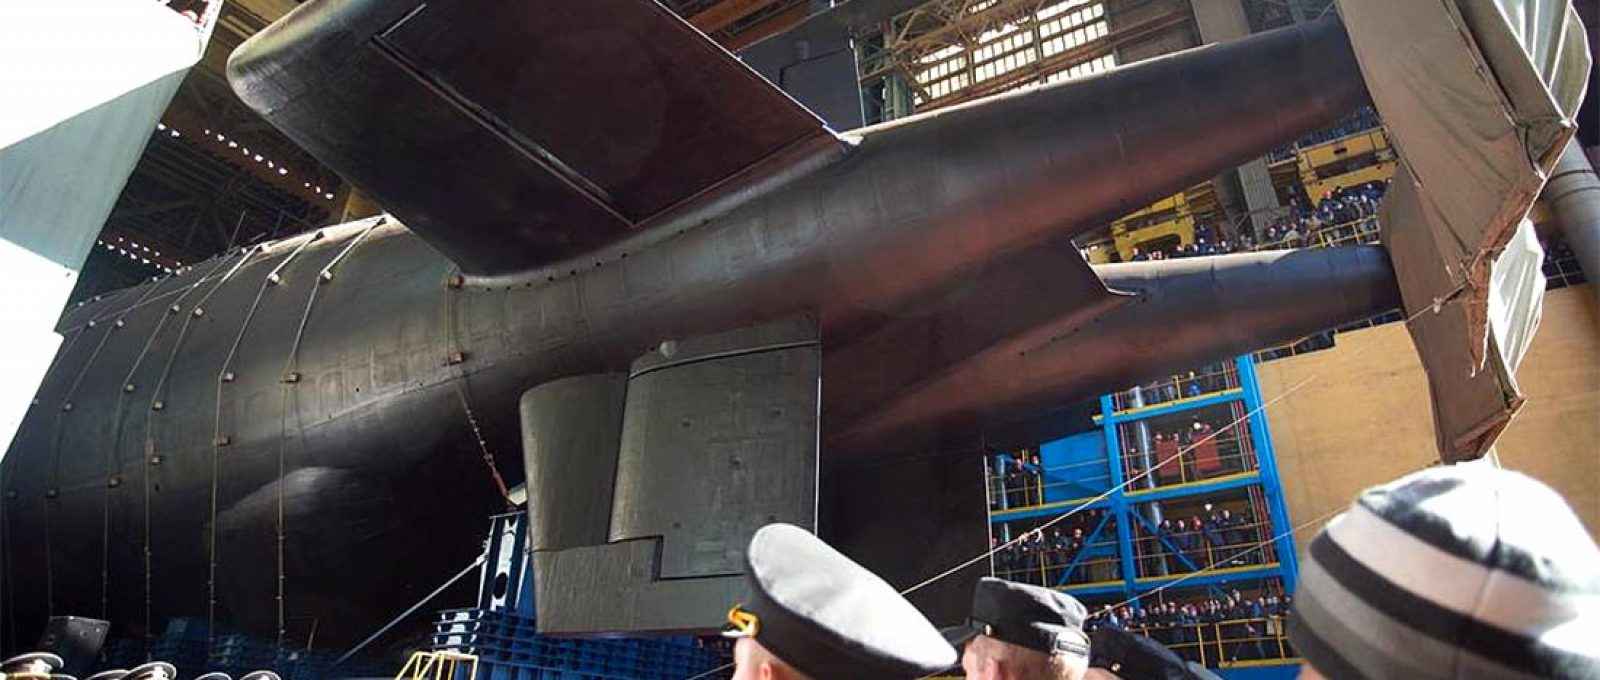 Submarino movido a energia nuclear Belgorod (Foto: Oleg Kuleshov/Tass).